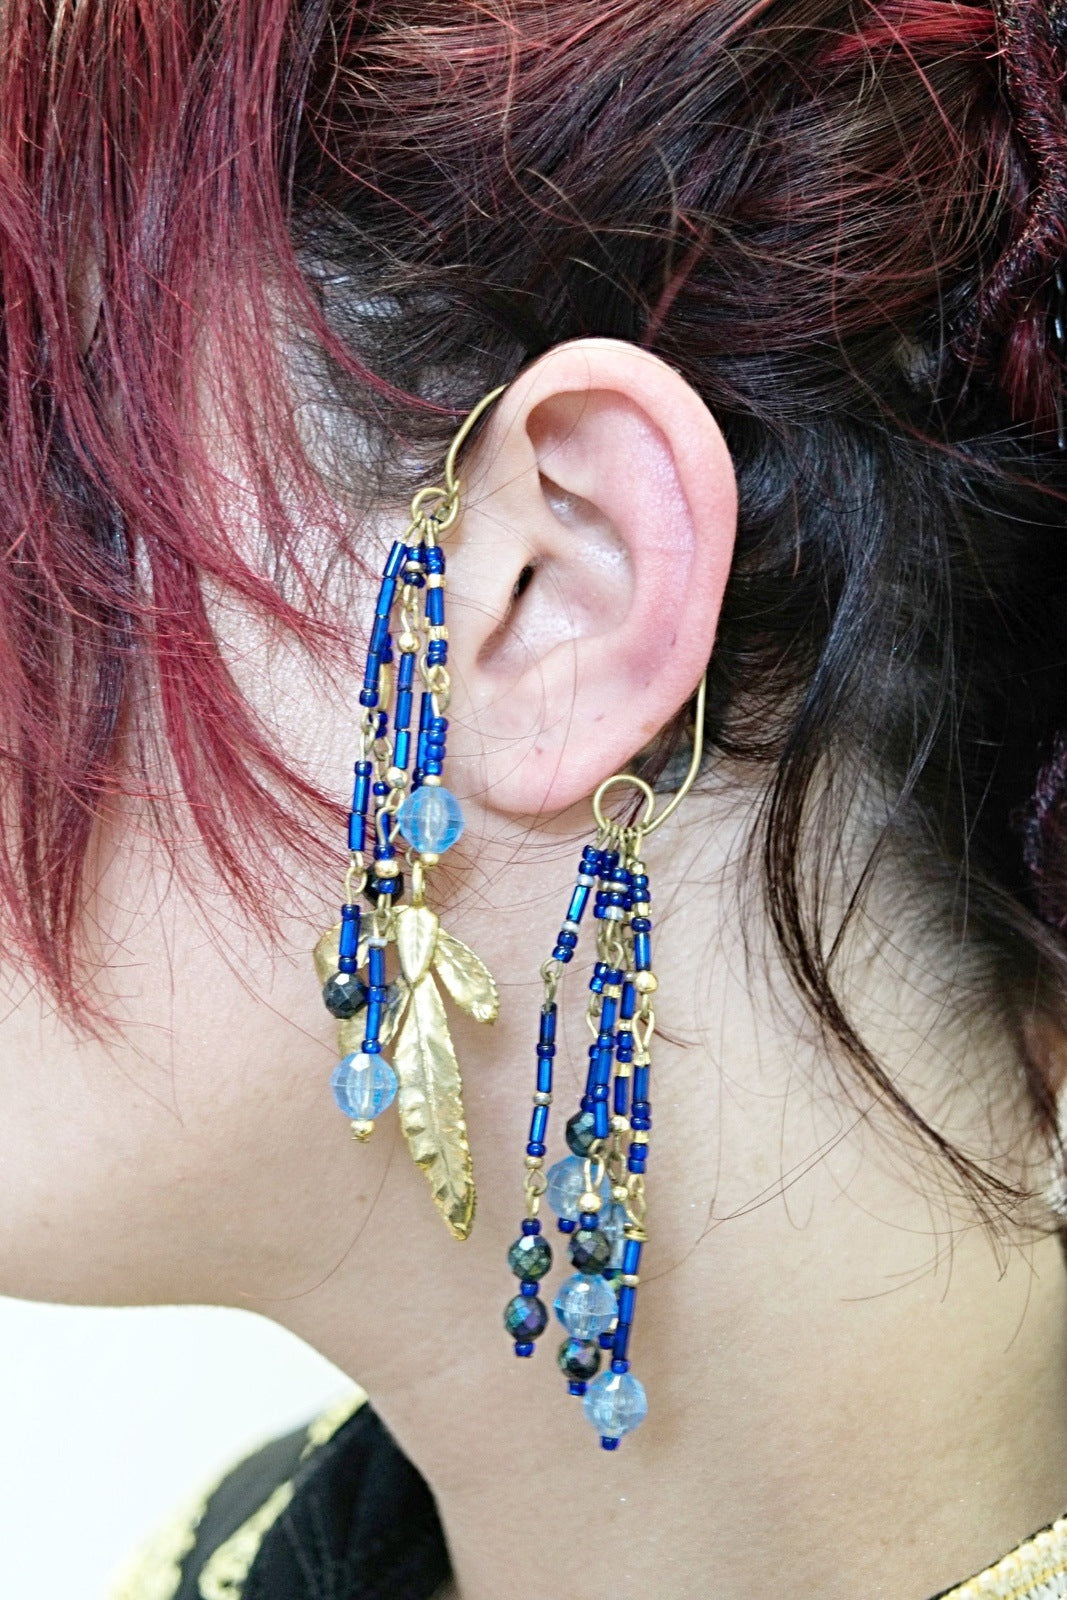 Blue Crystals Chandelier Single Earrings Vintage Jewelry